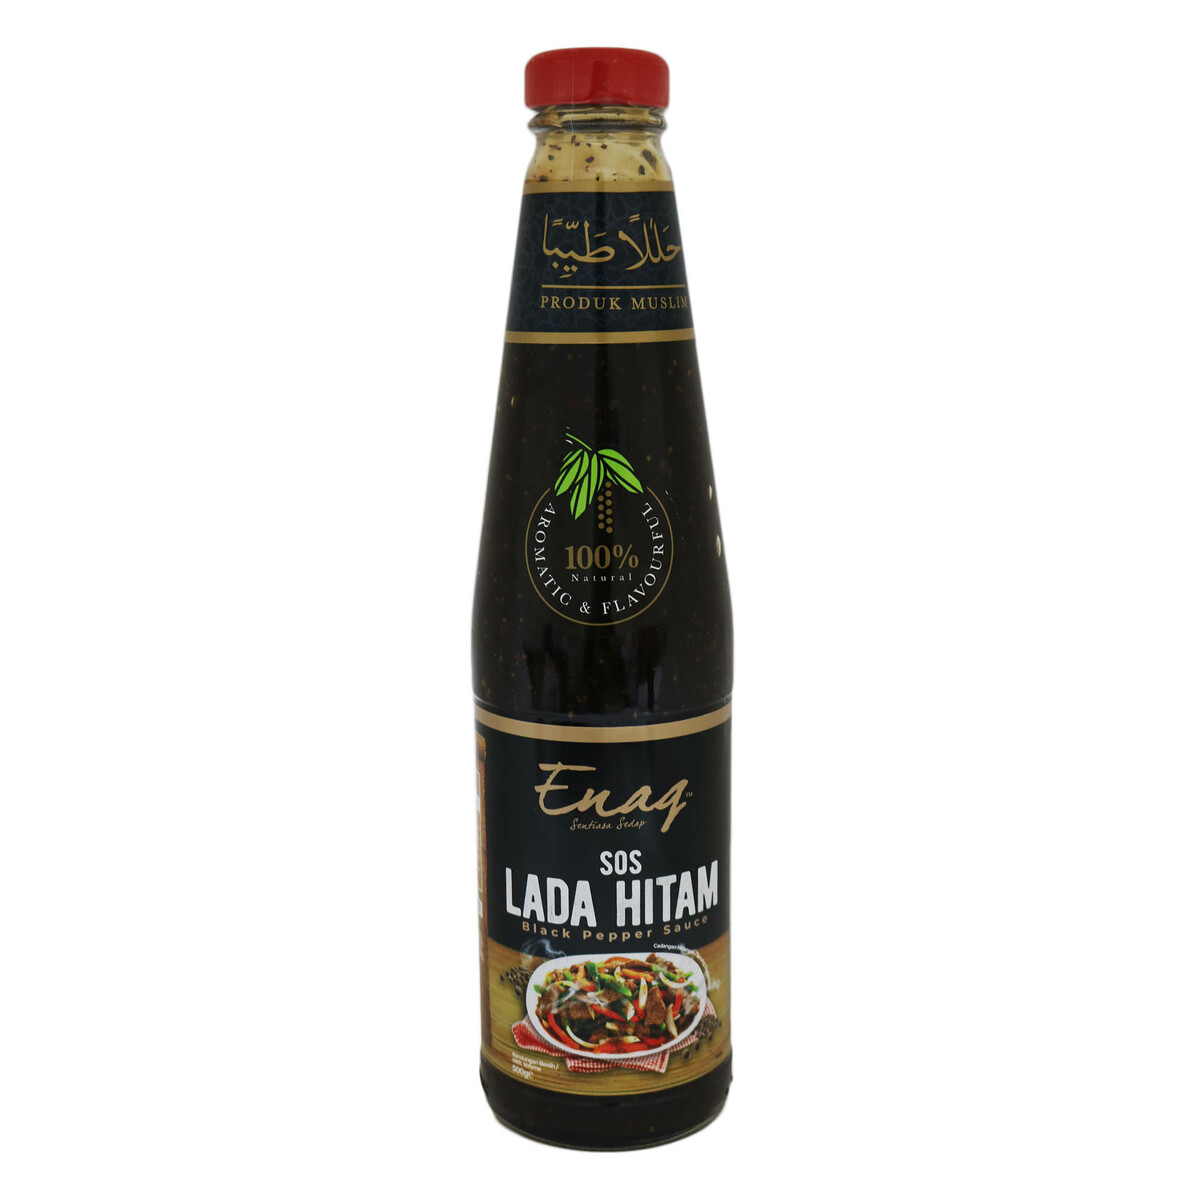 Enaq Black Pepper Sauce 500g